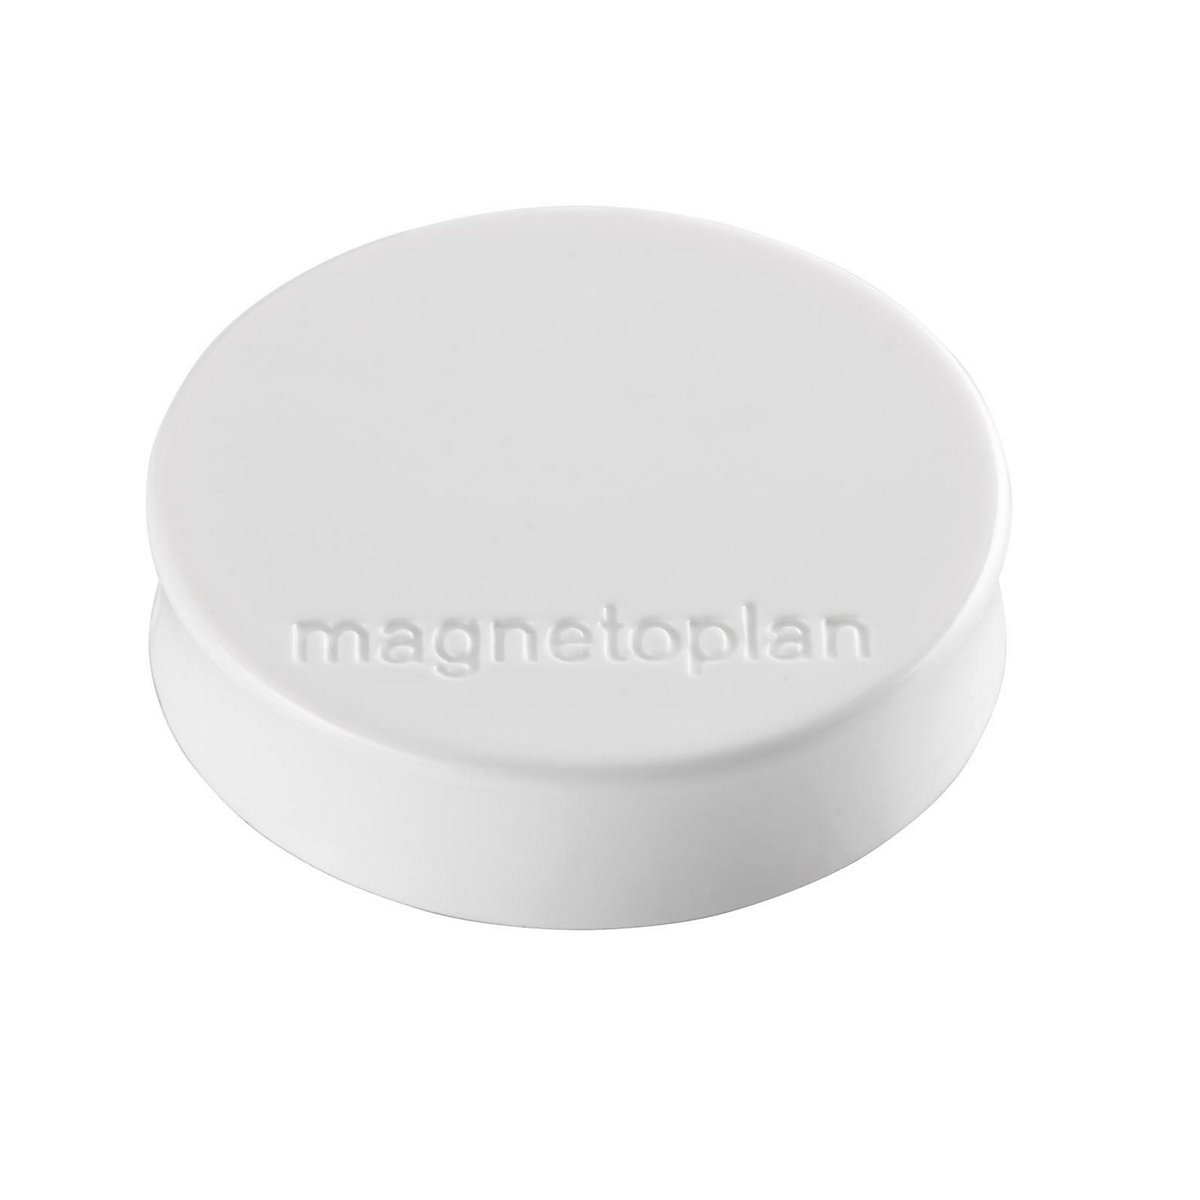 Ergonomický magnet - magnetoplan